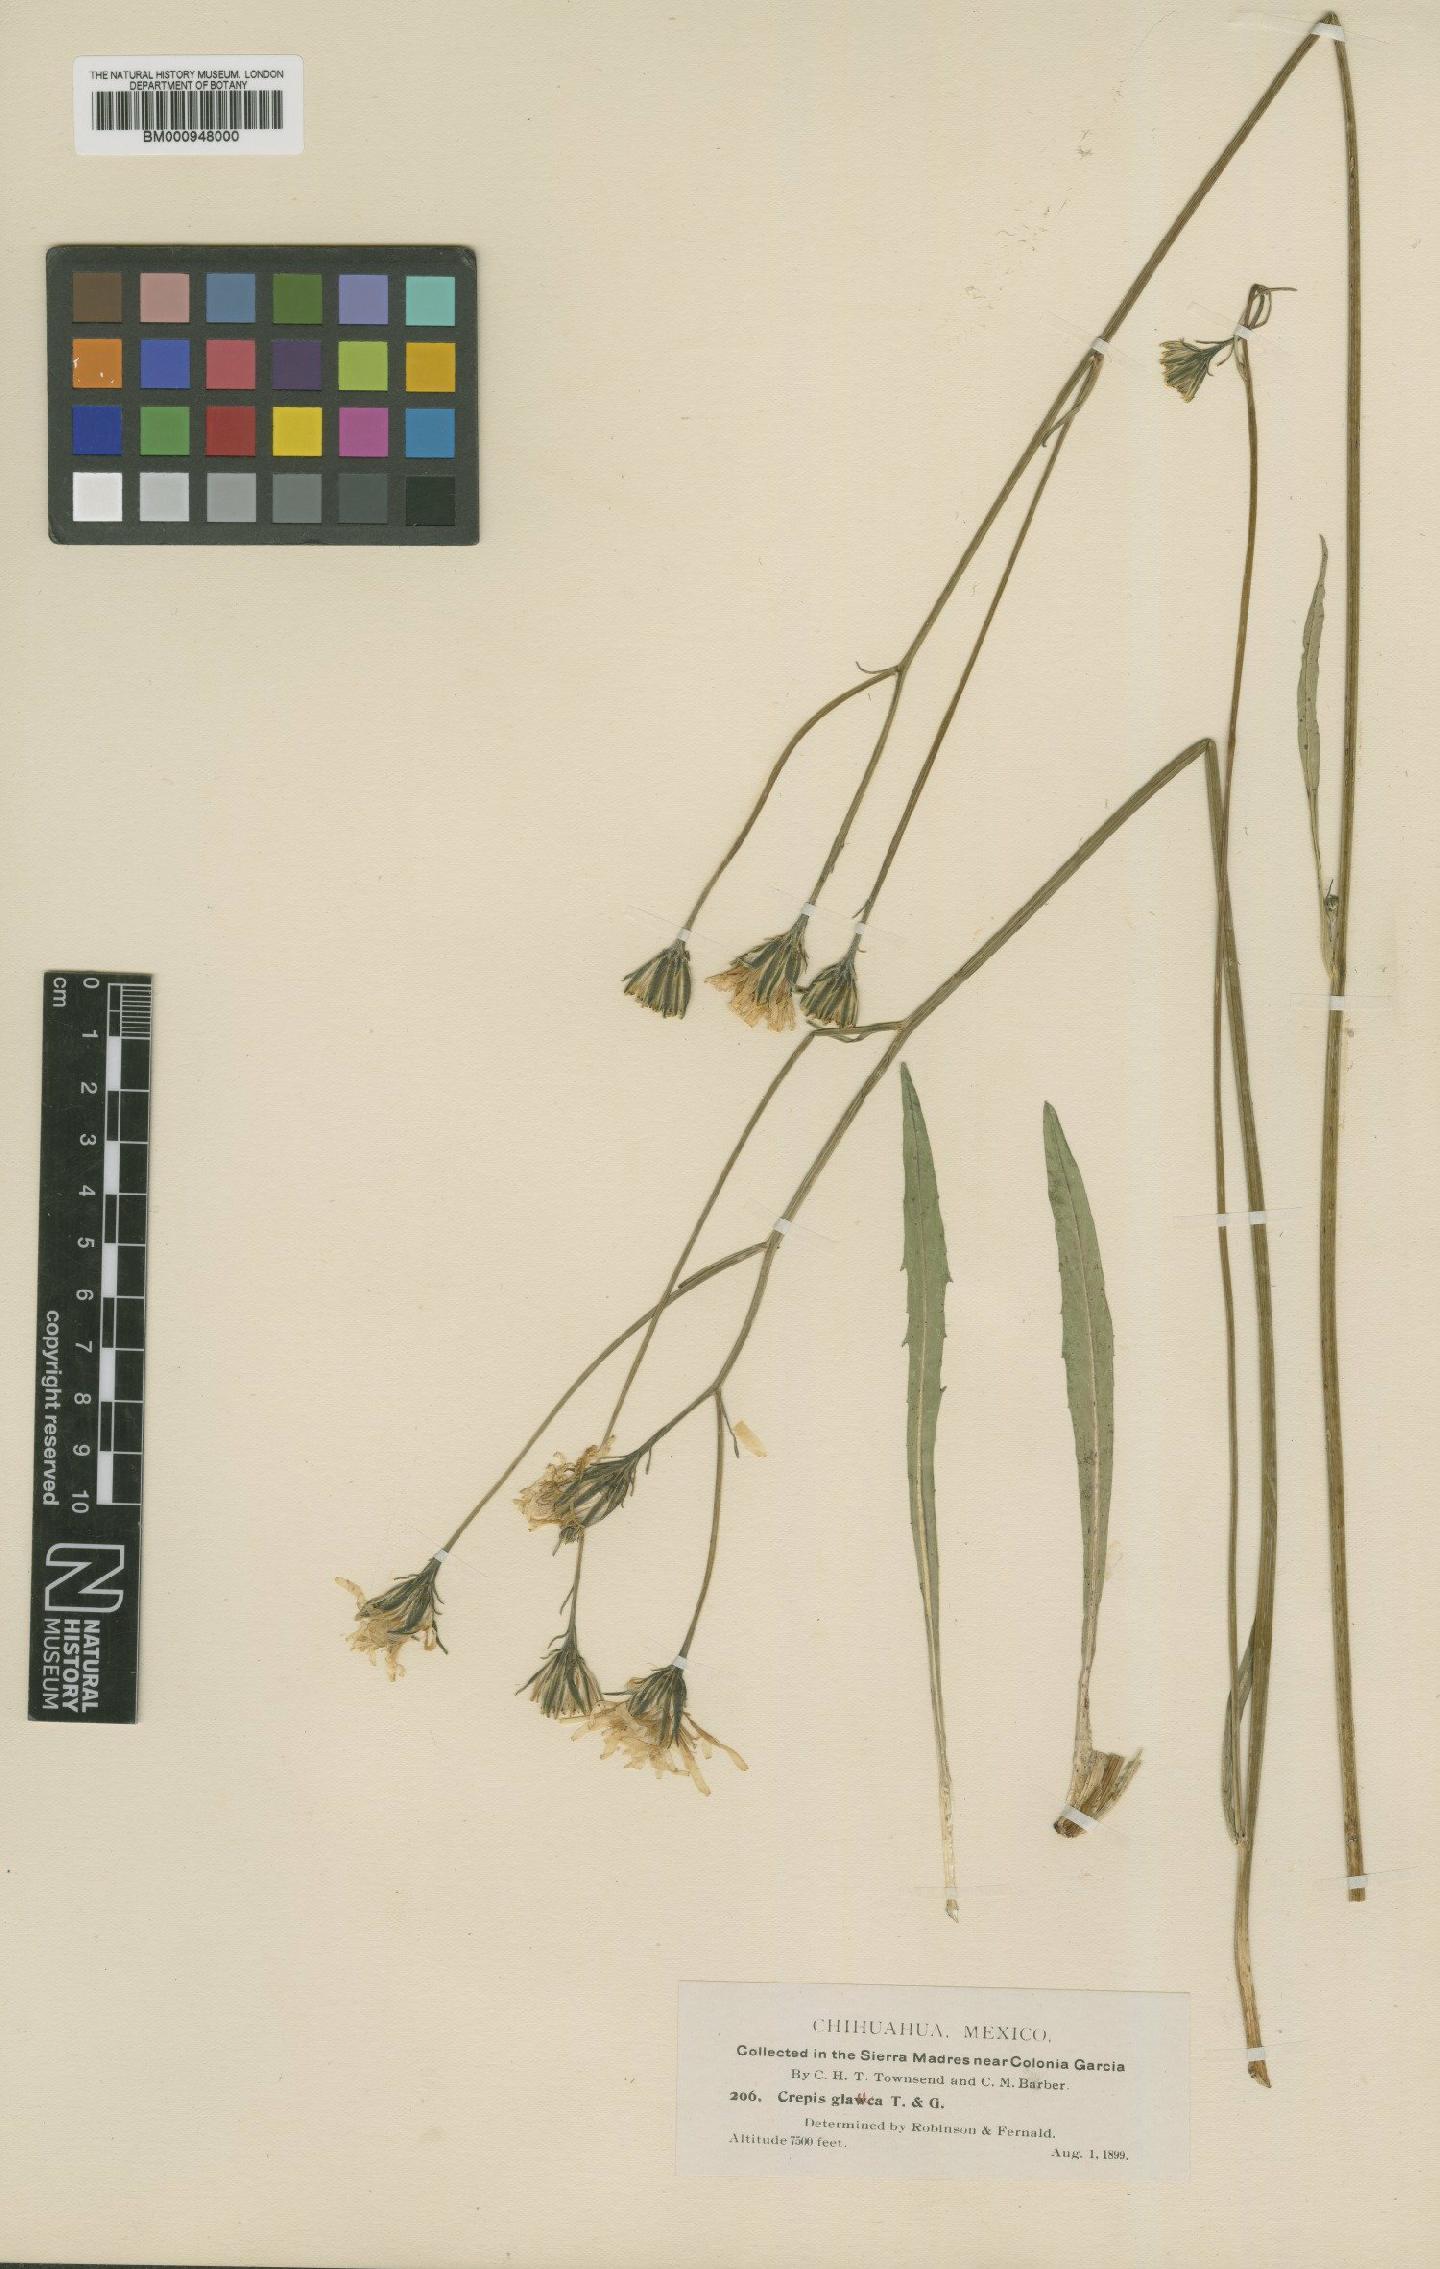 To NHMUK collection (Crepis barberi Greenm.; Type; NHMUK:ecatalogue:621400)